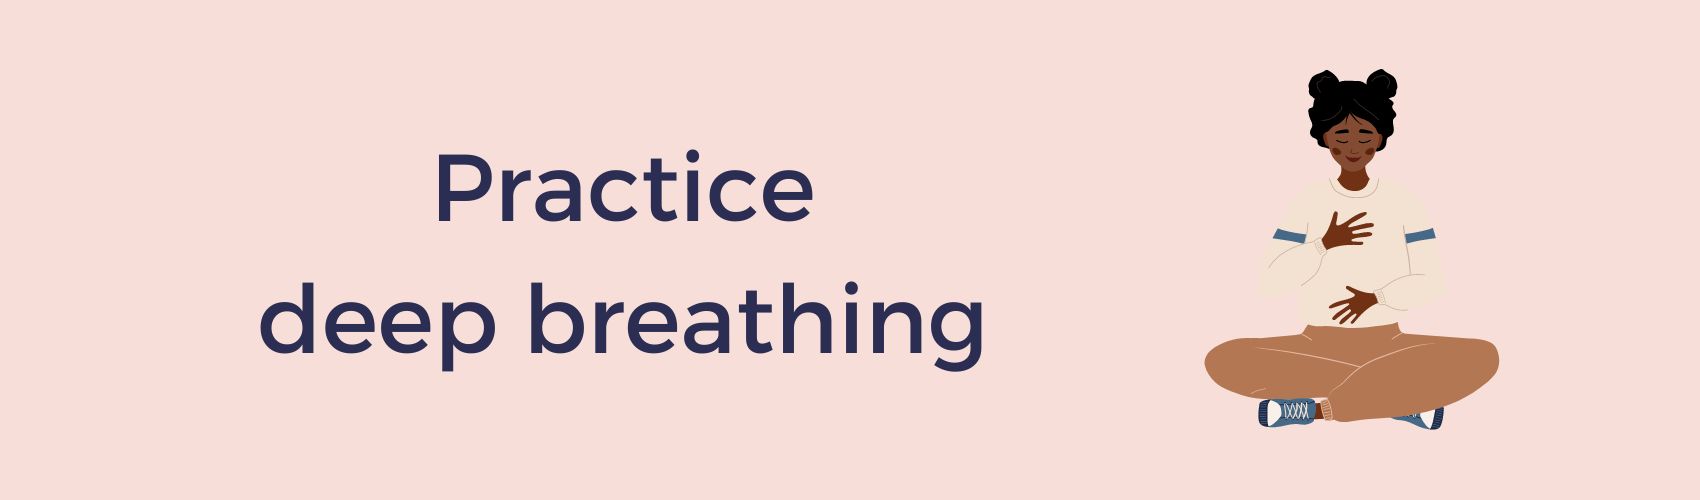 Practice breathing